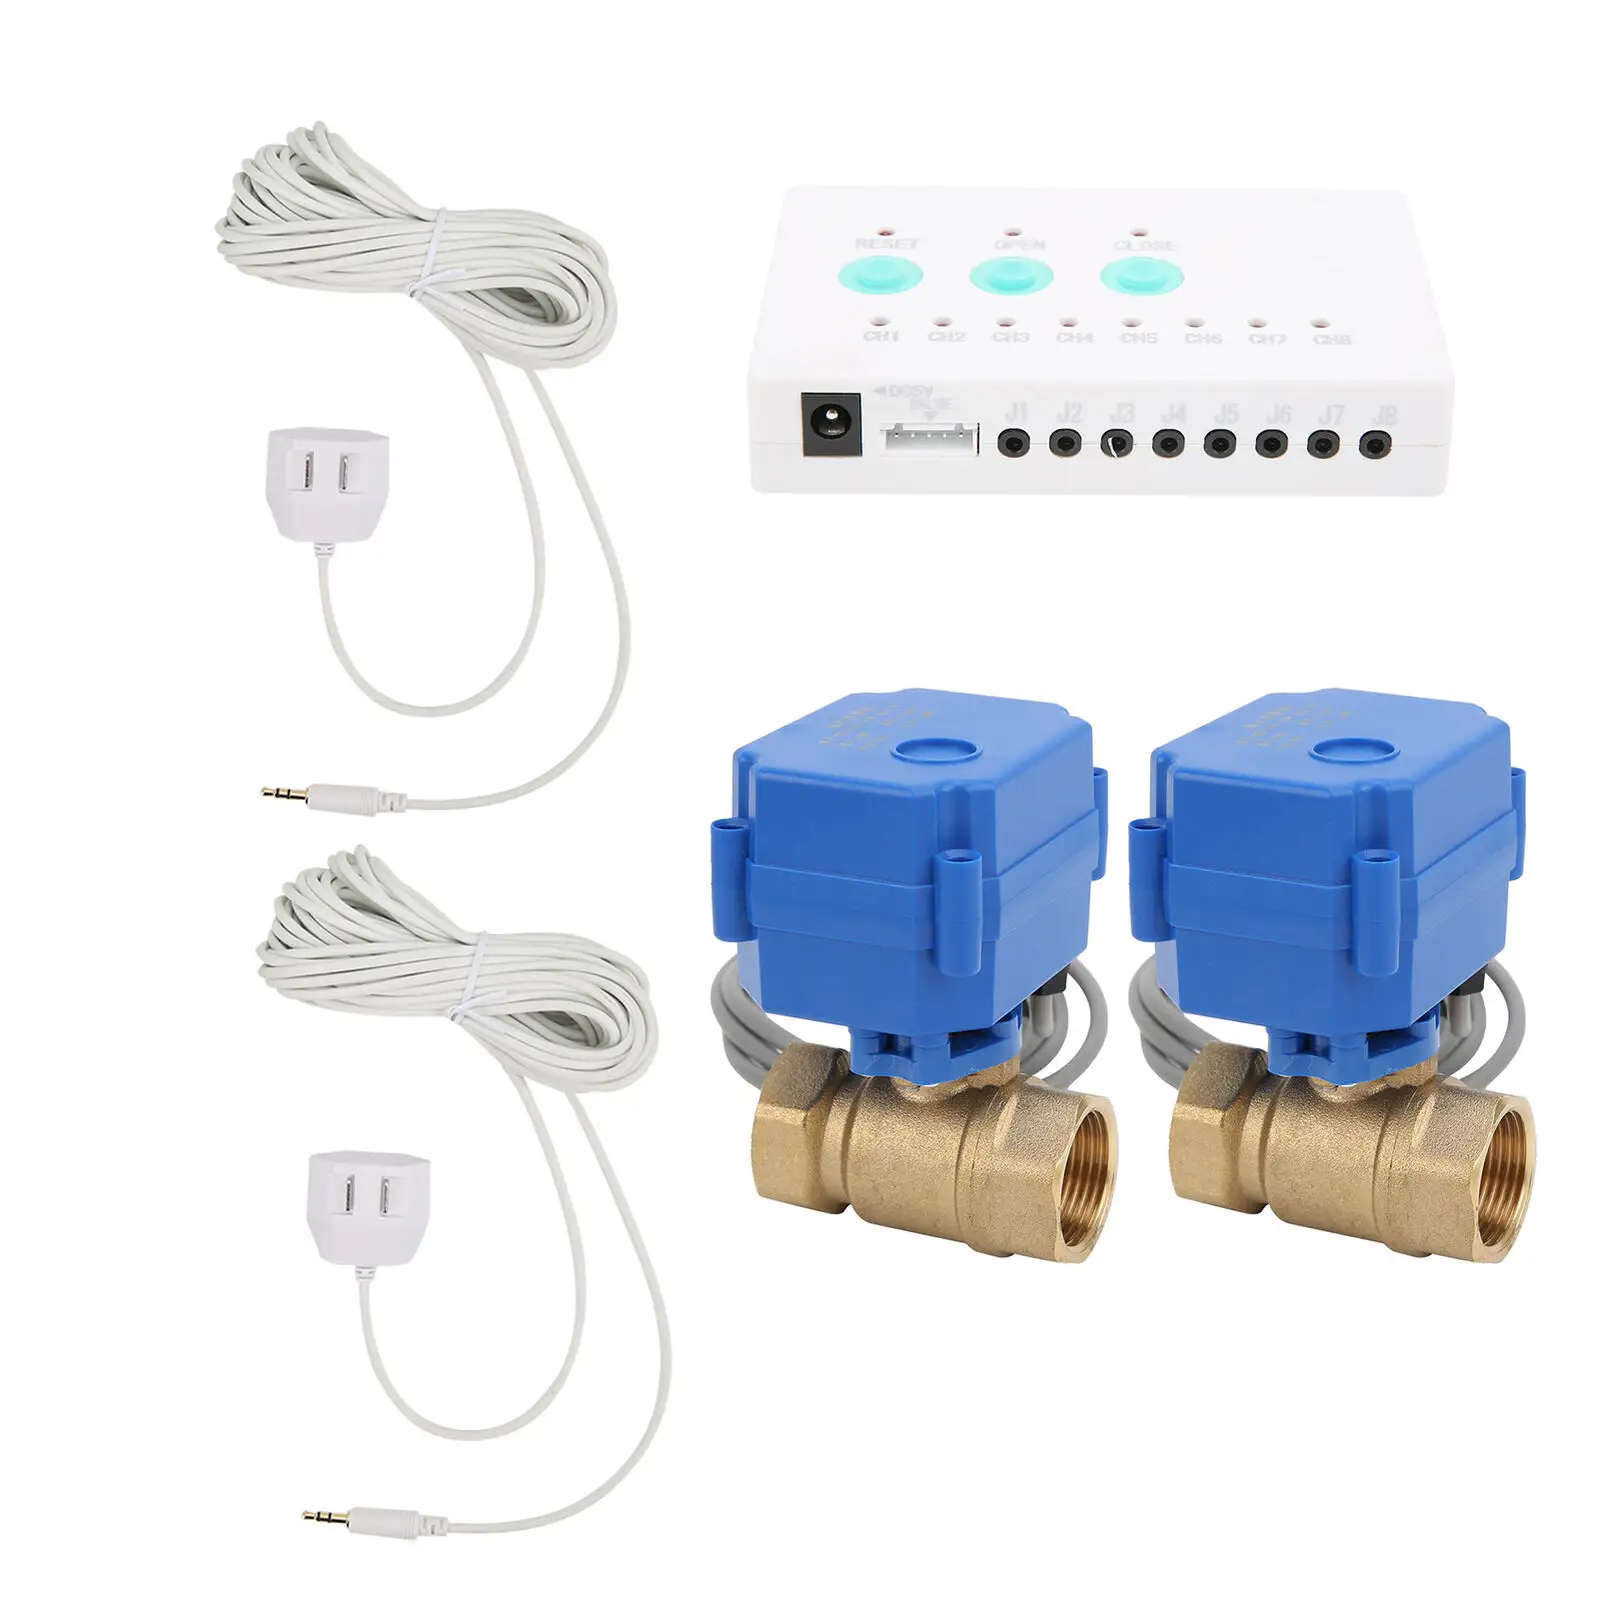 (DN15*2pcs) Water Leakage Sensor for Smart Home Sensor Cable with 2pcs 1/2" water shutoff valve water Leak Detector